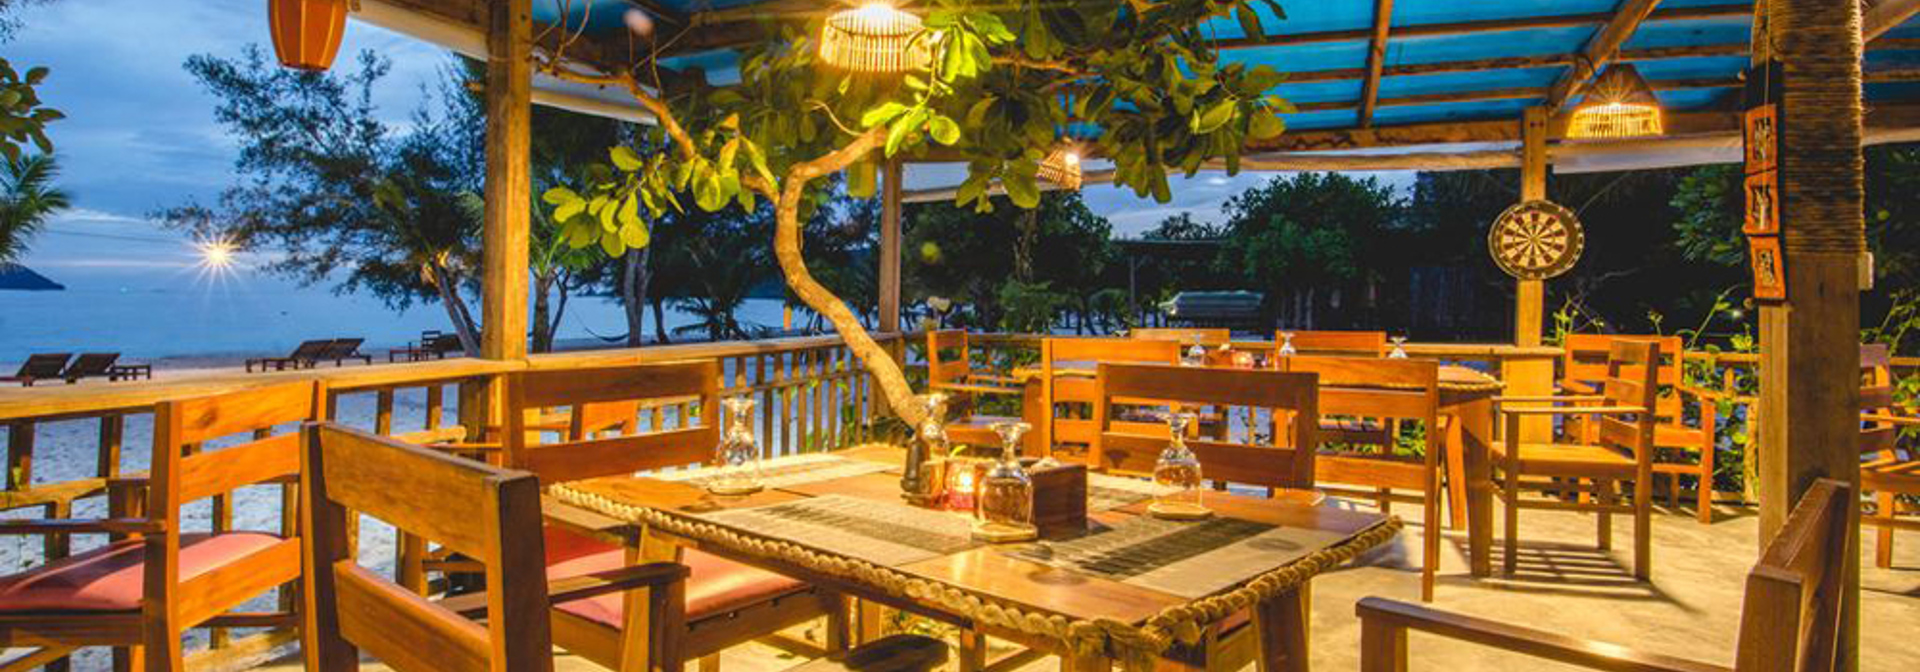 cambodia - long set resort_restaurant_02